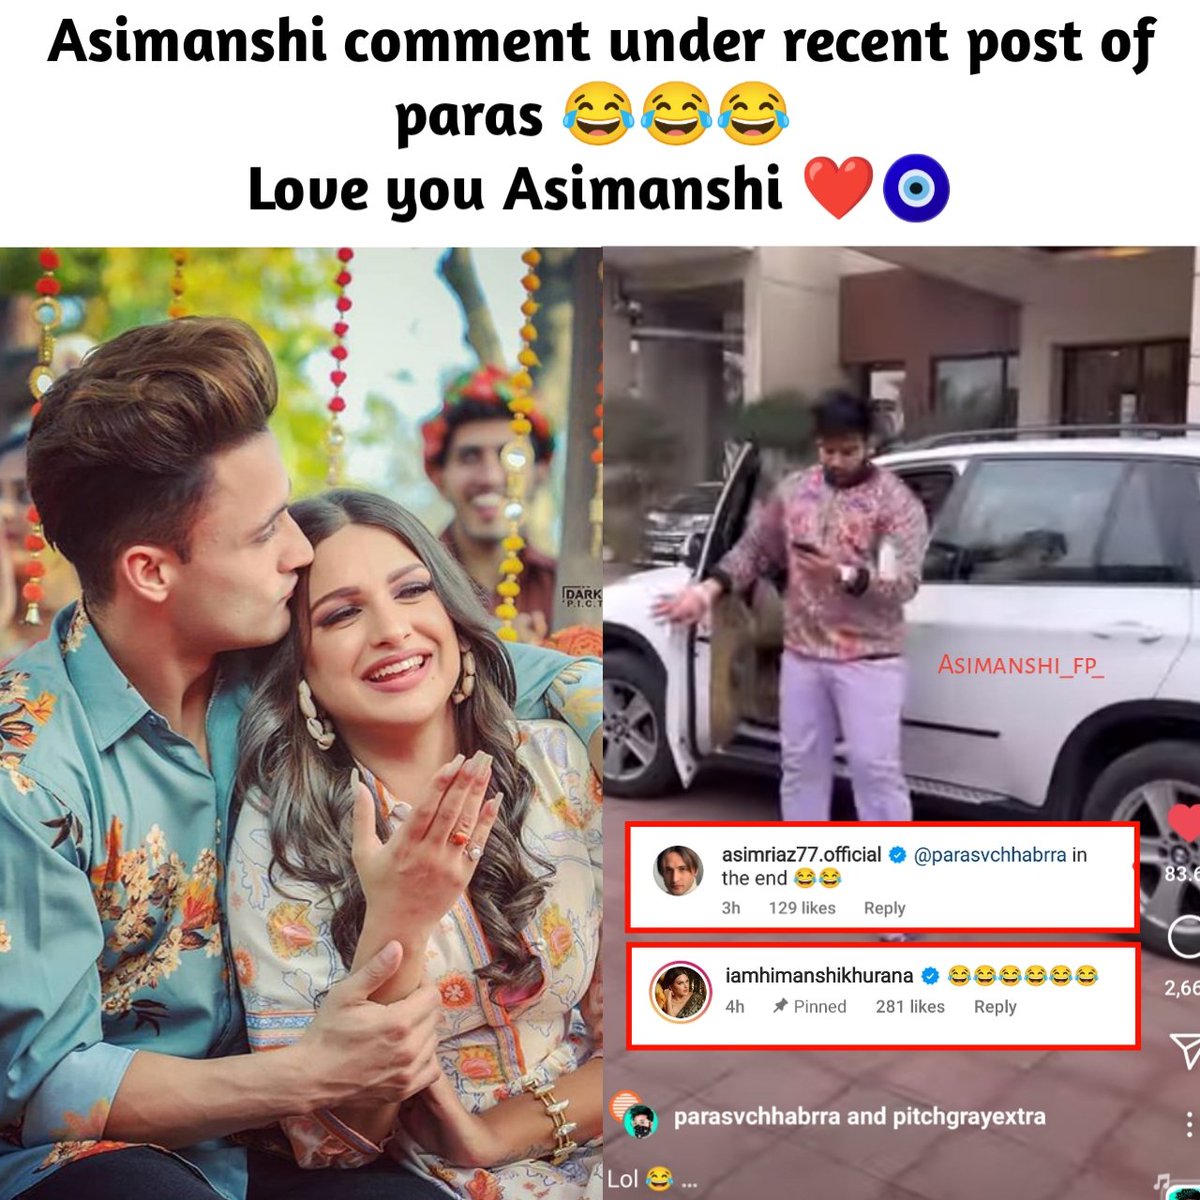 #AsiManshi comment under the recent post of #paraschabra 😂😂
#AsimRiaz𓃵 #HimanshiKhurana
MOST DESIRABLE MAN ASIM RIAZ